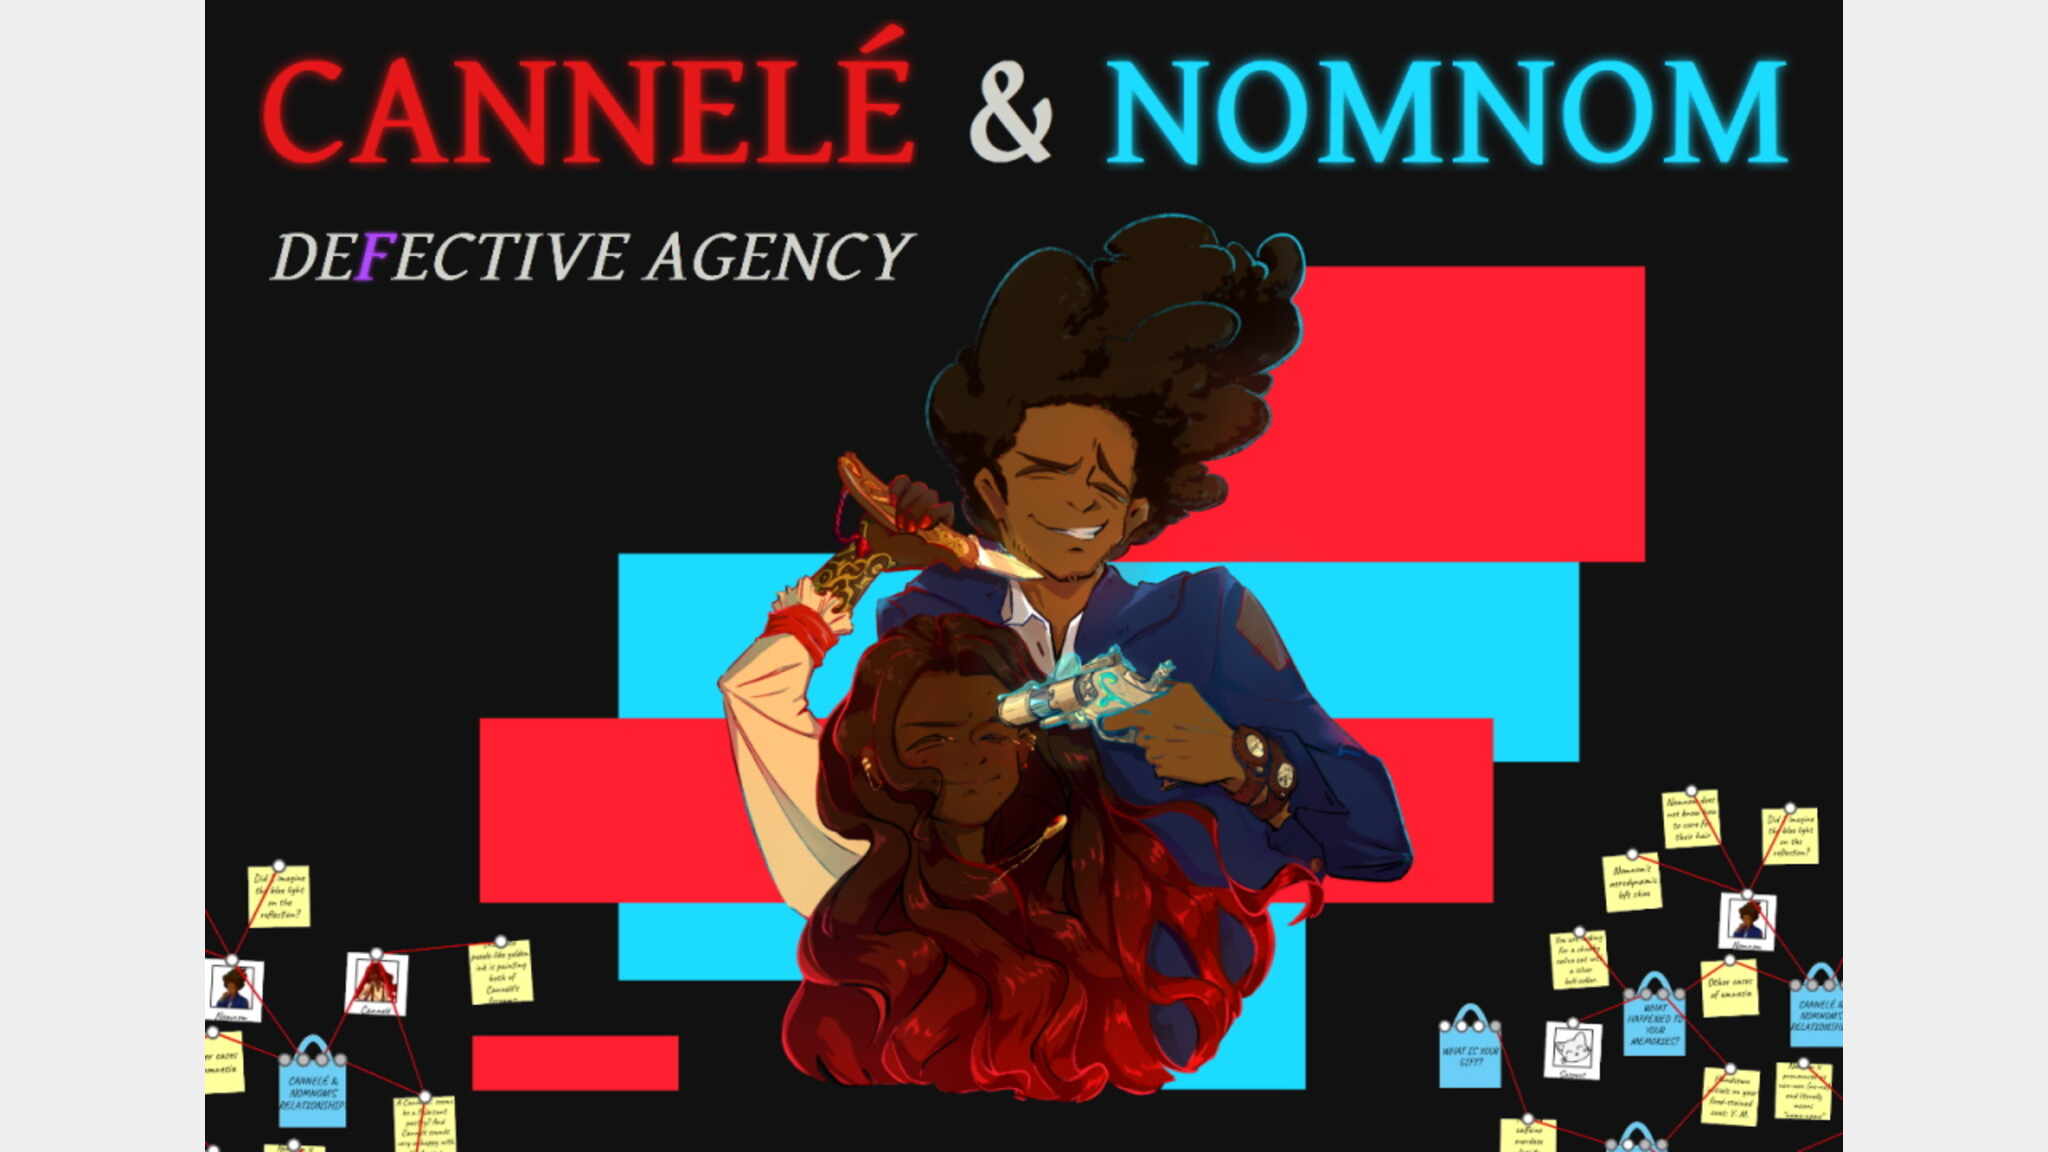 Cannelé & Nomnom - DEFECTIVE AGENCY